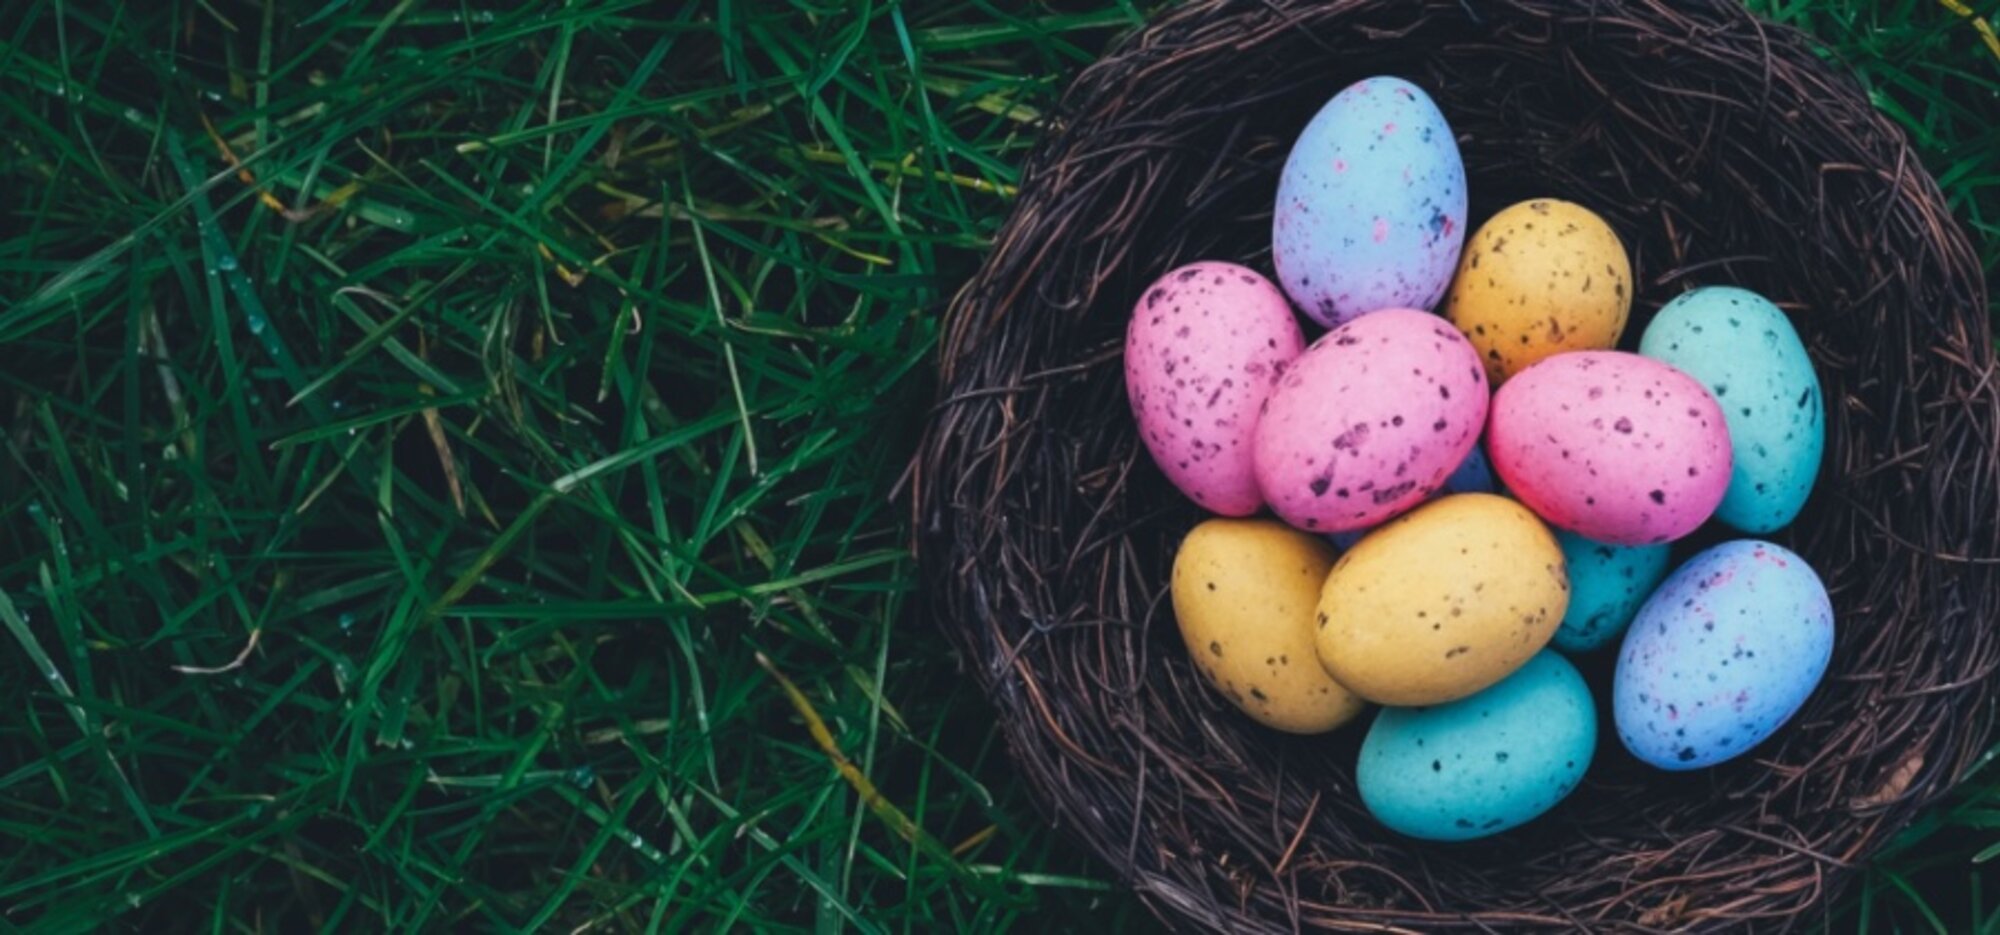 Ostern nachhaltig feiern: 